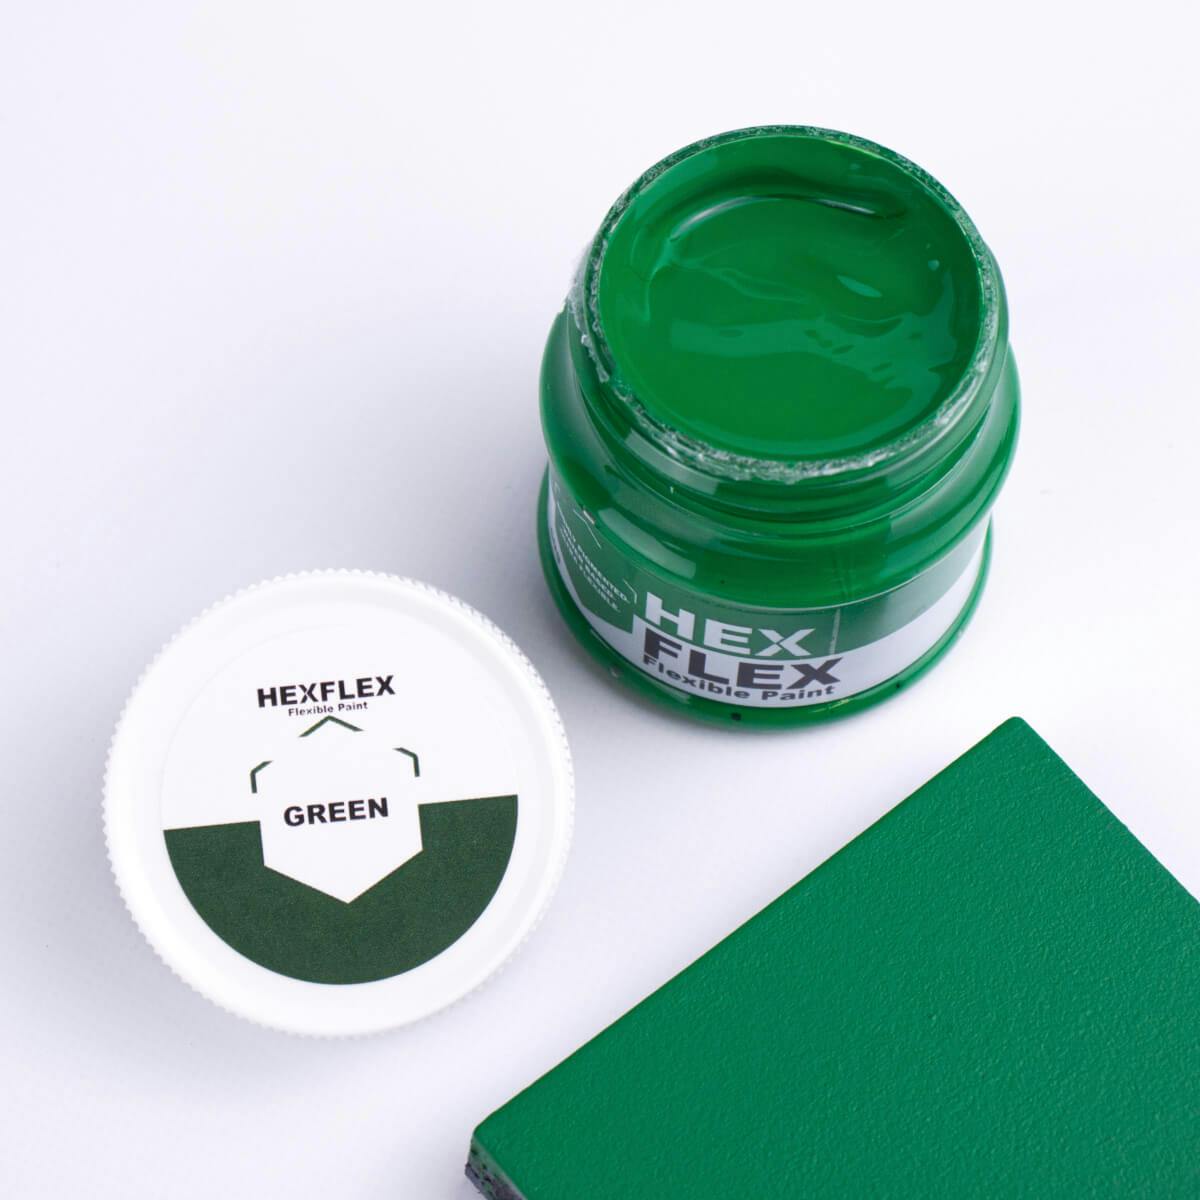 The bottle, cap and green HexFlex colour sample